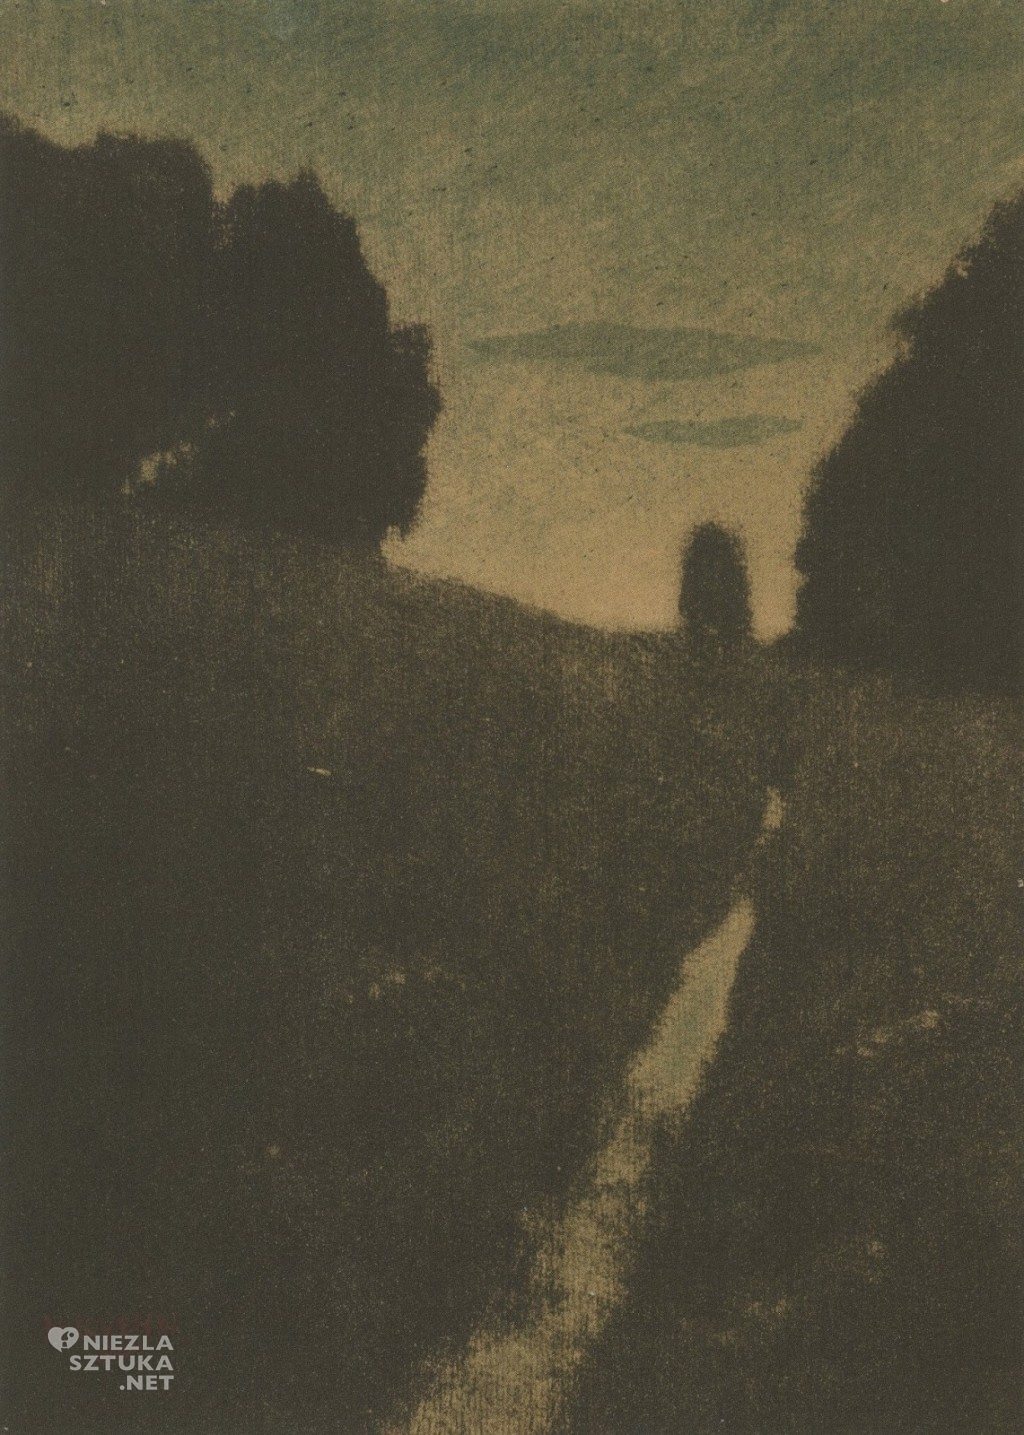 Heinrich Kuehn + Twilight - Dammerung +1898 + bichromate print with watercolor + Albertina Museum - Vienna